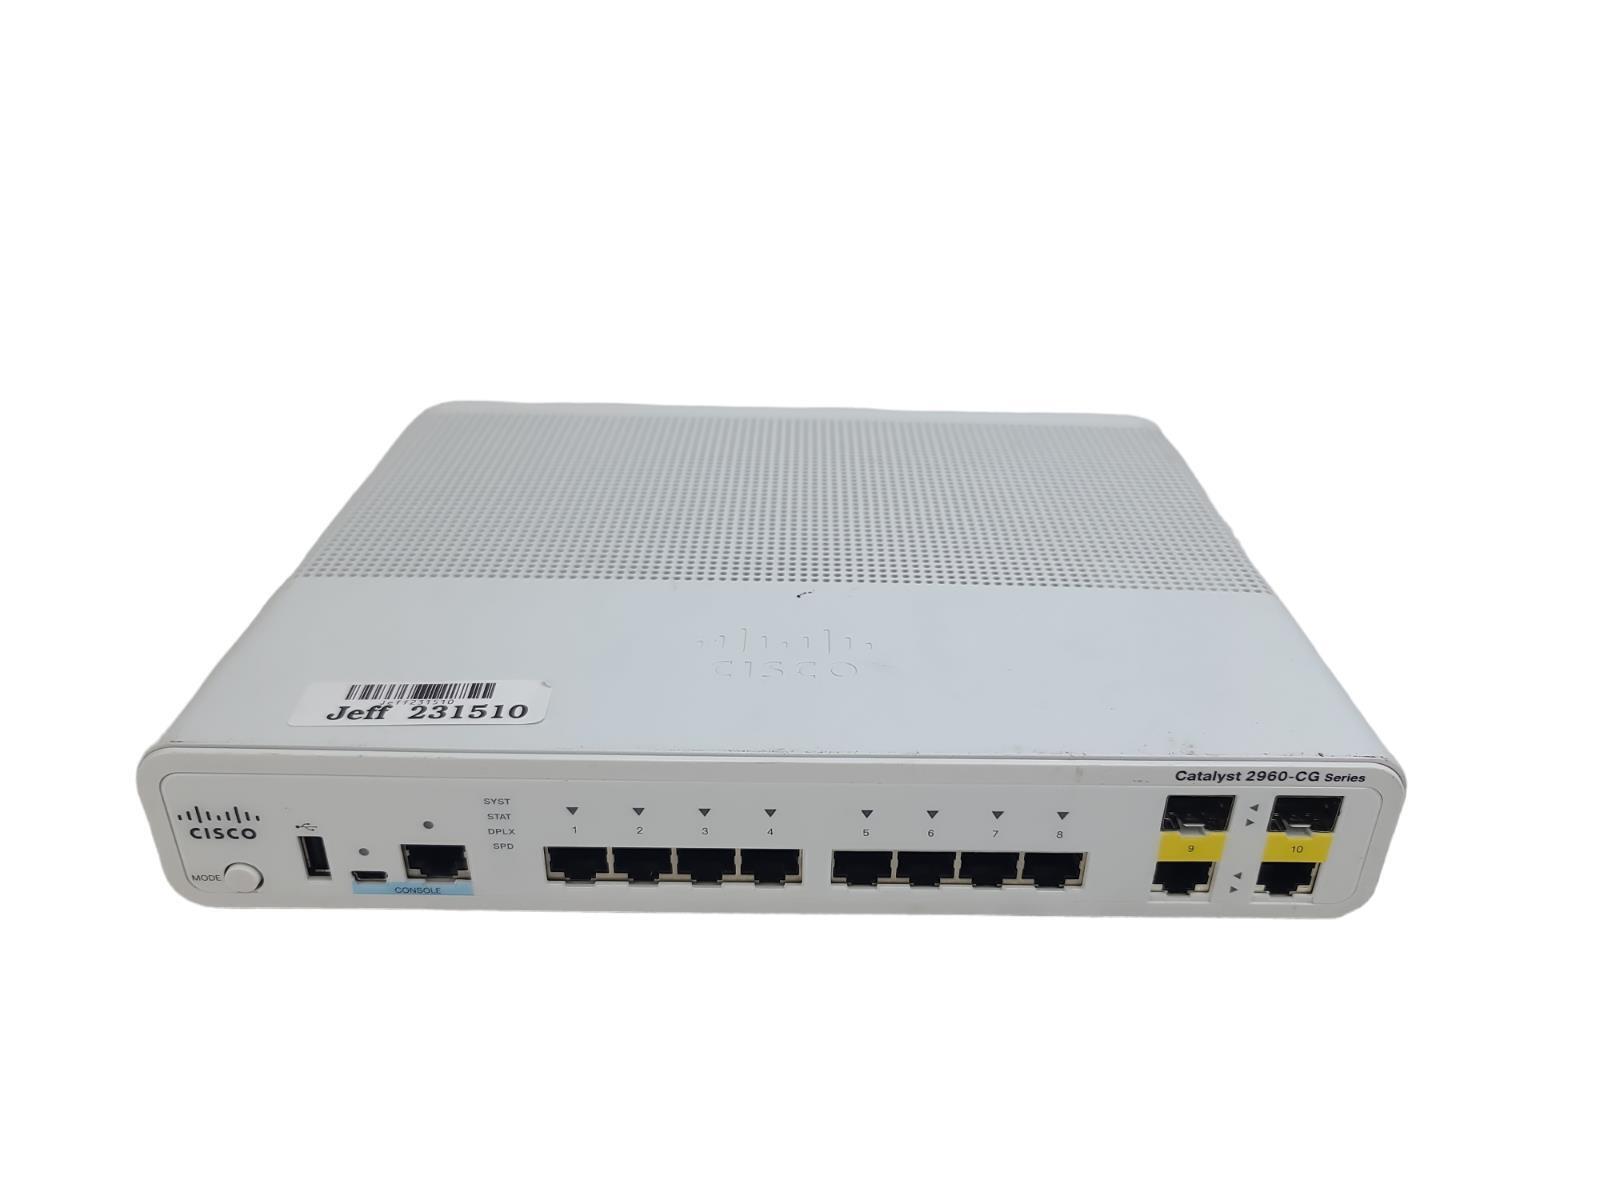 Cisco Catalyst 2960 CG Series 8-Port Network Switch WS-C2960CG-8TC-L